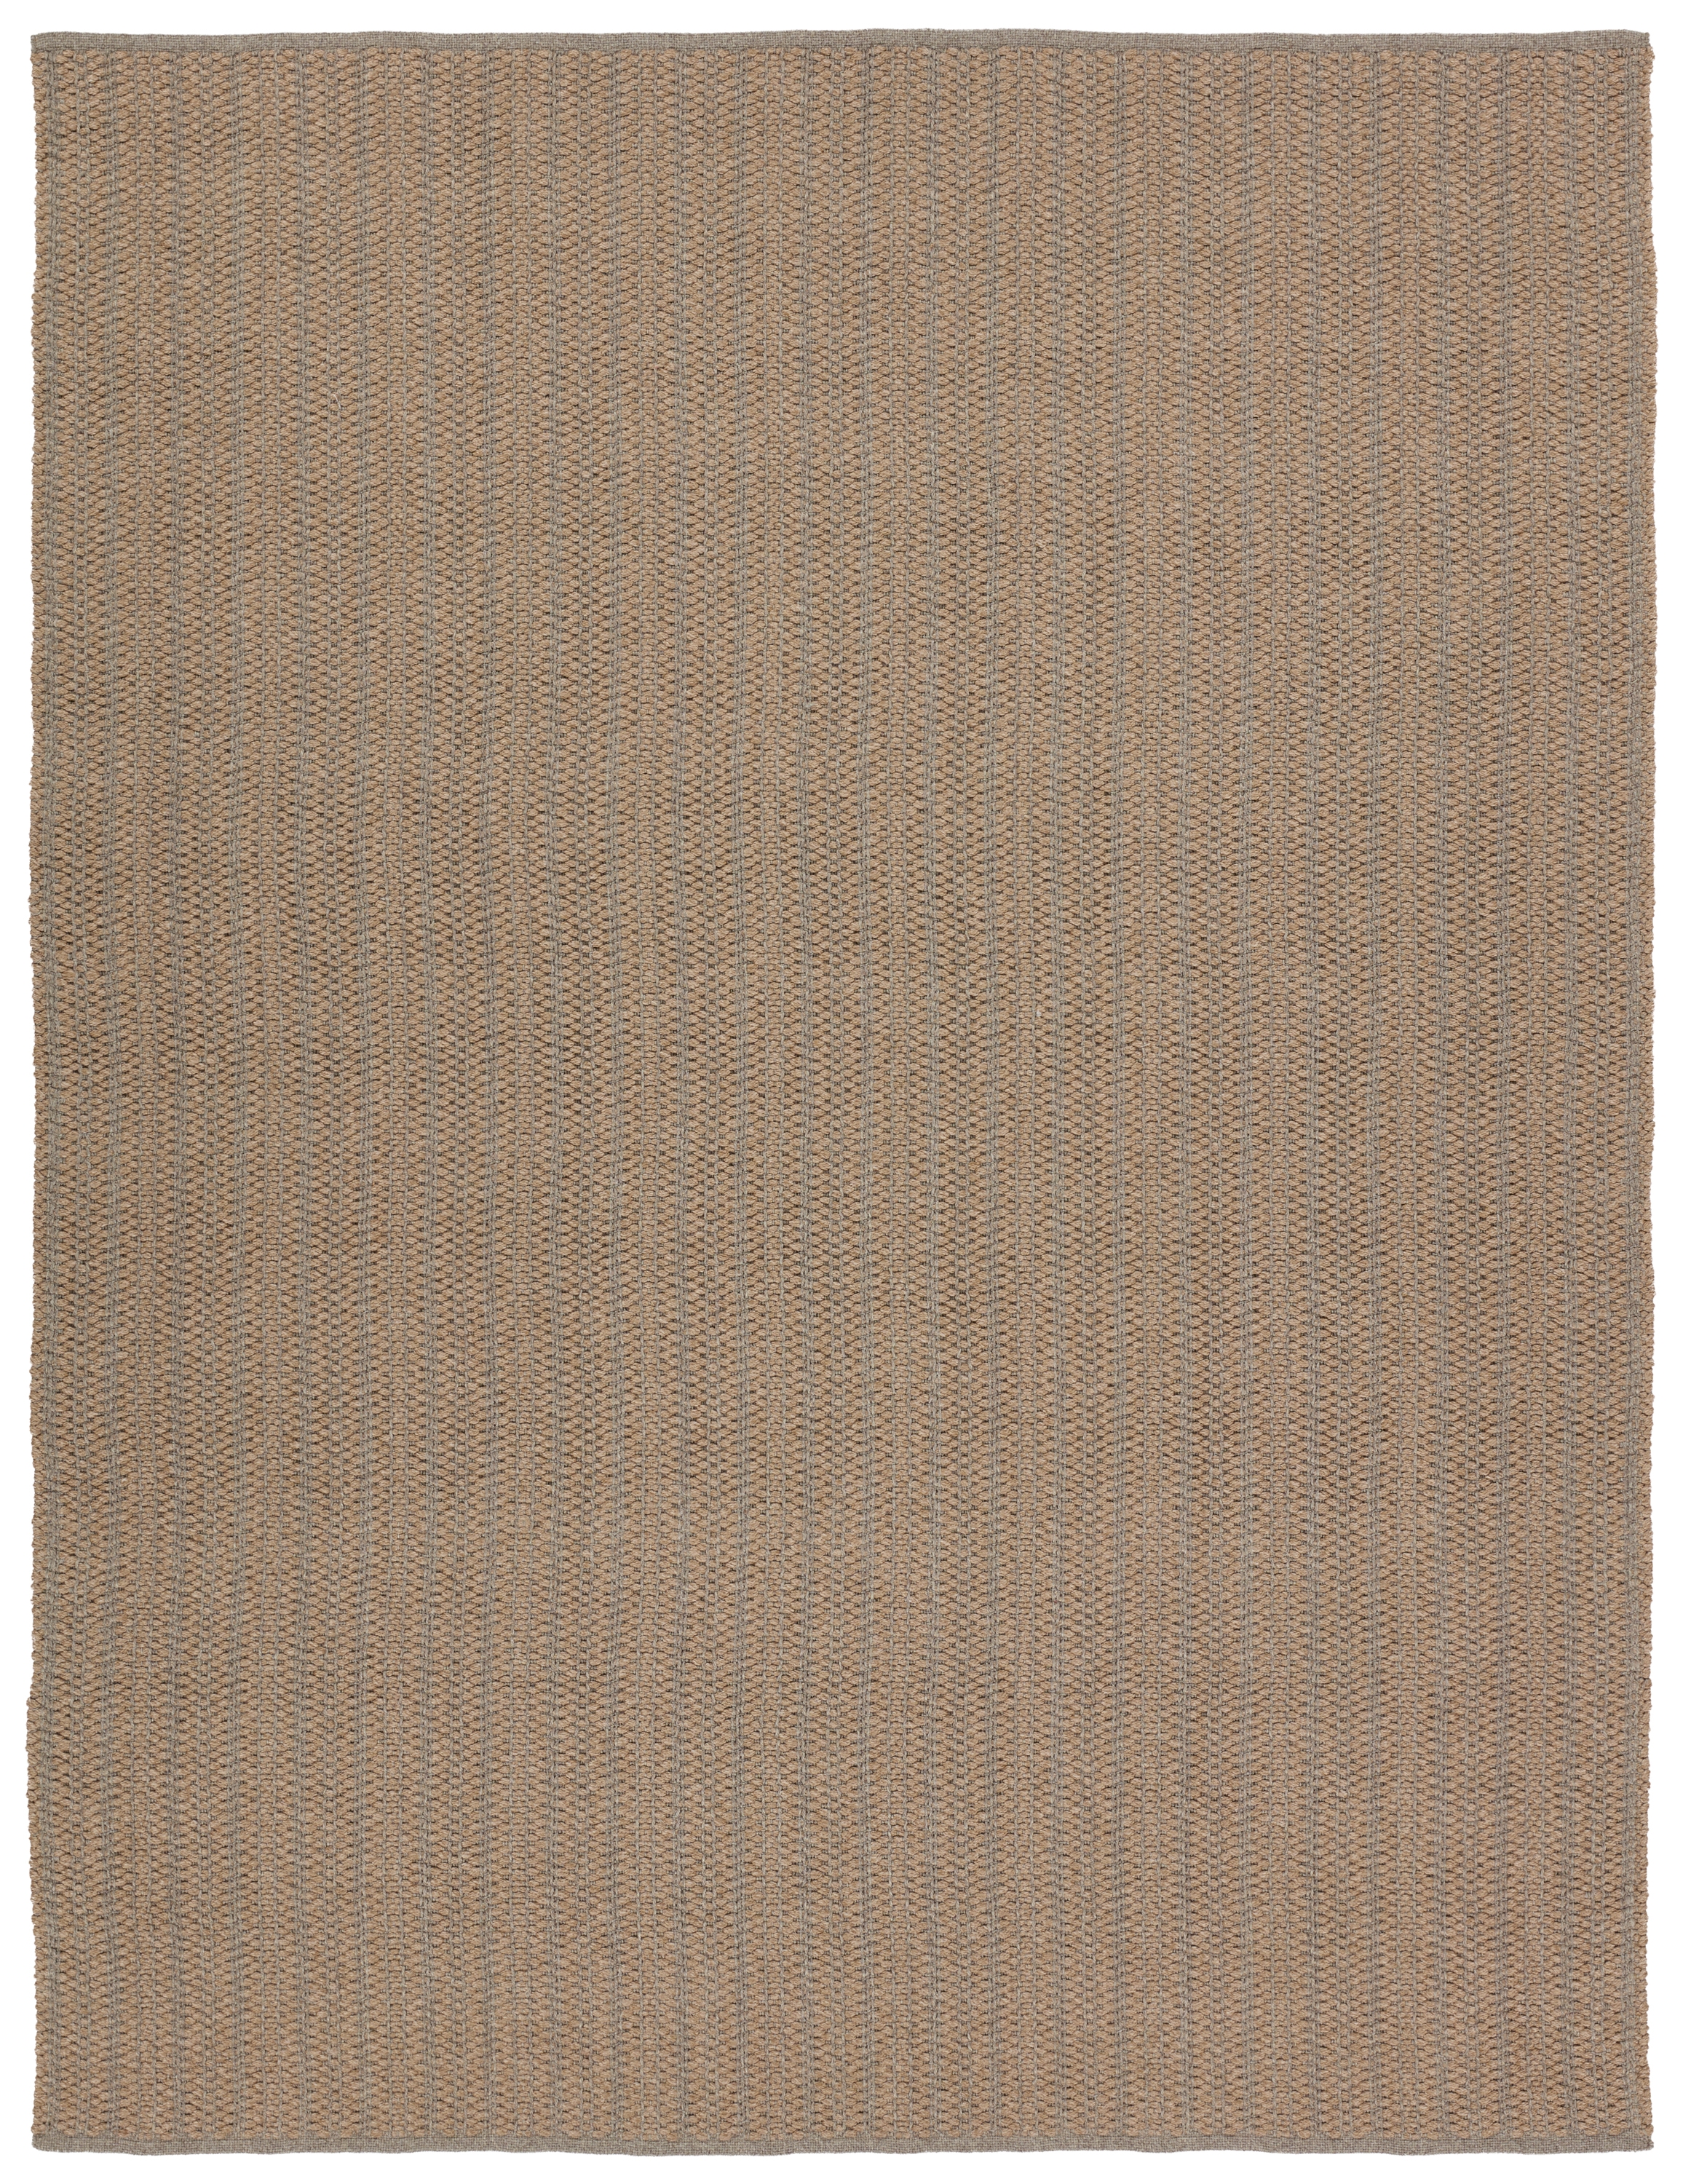 Elmas Handmade Indoor/Outdoor Striped Tan/Gray Area Rug (4'X6') - Image 0